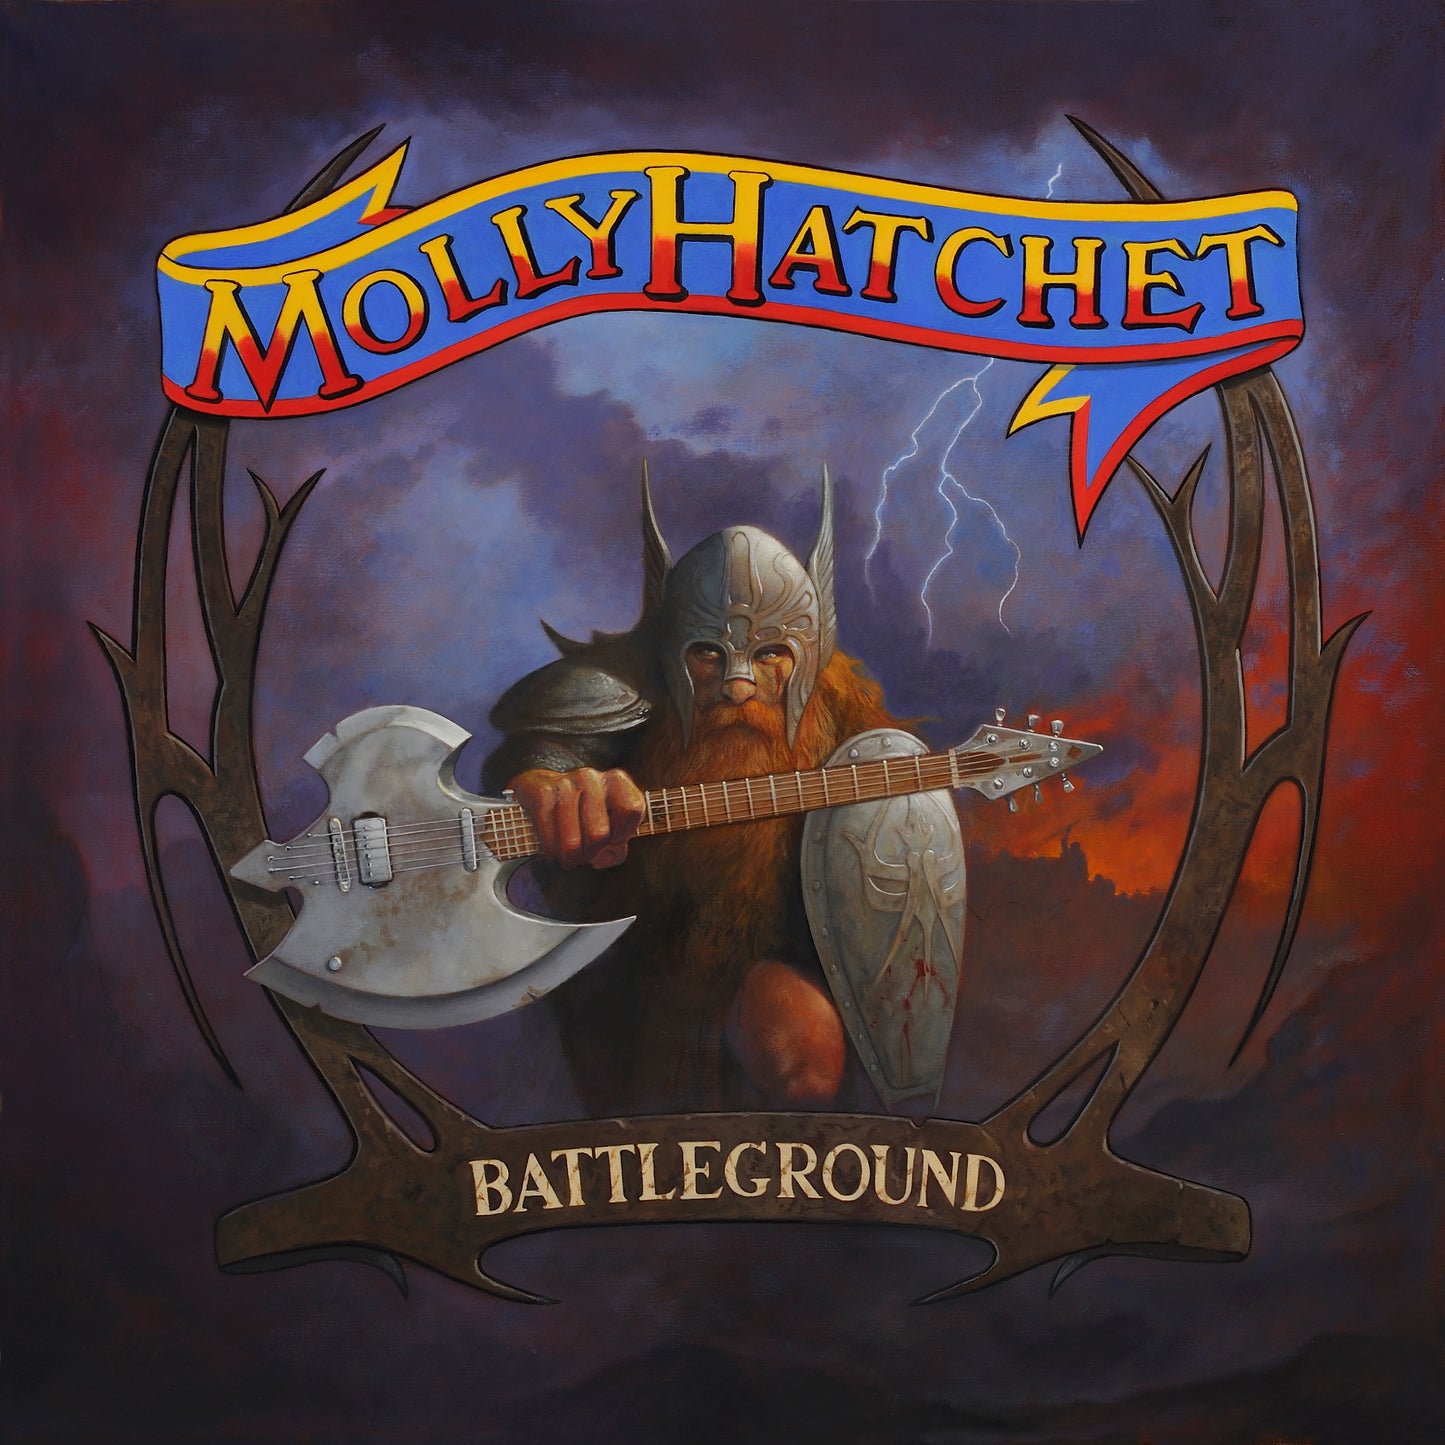 Molly Hatchet "Battleground" CD